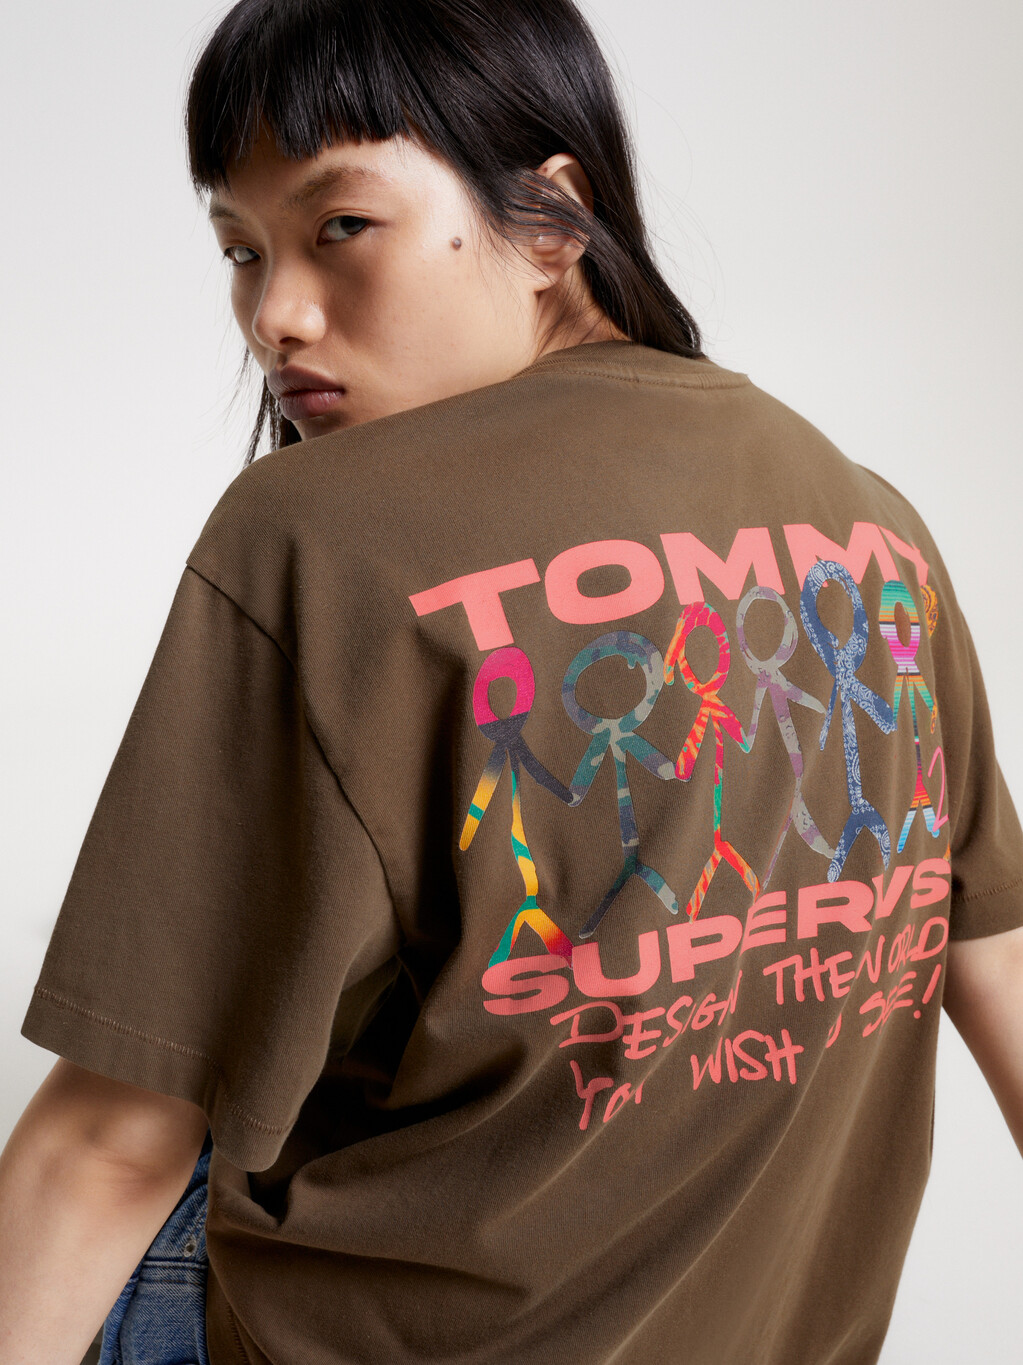 Tommy X Supervsn Design The World T 裇, Dark Earth, hi-res